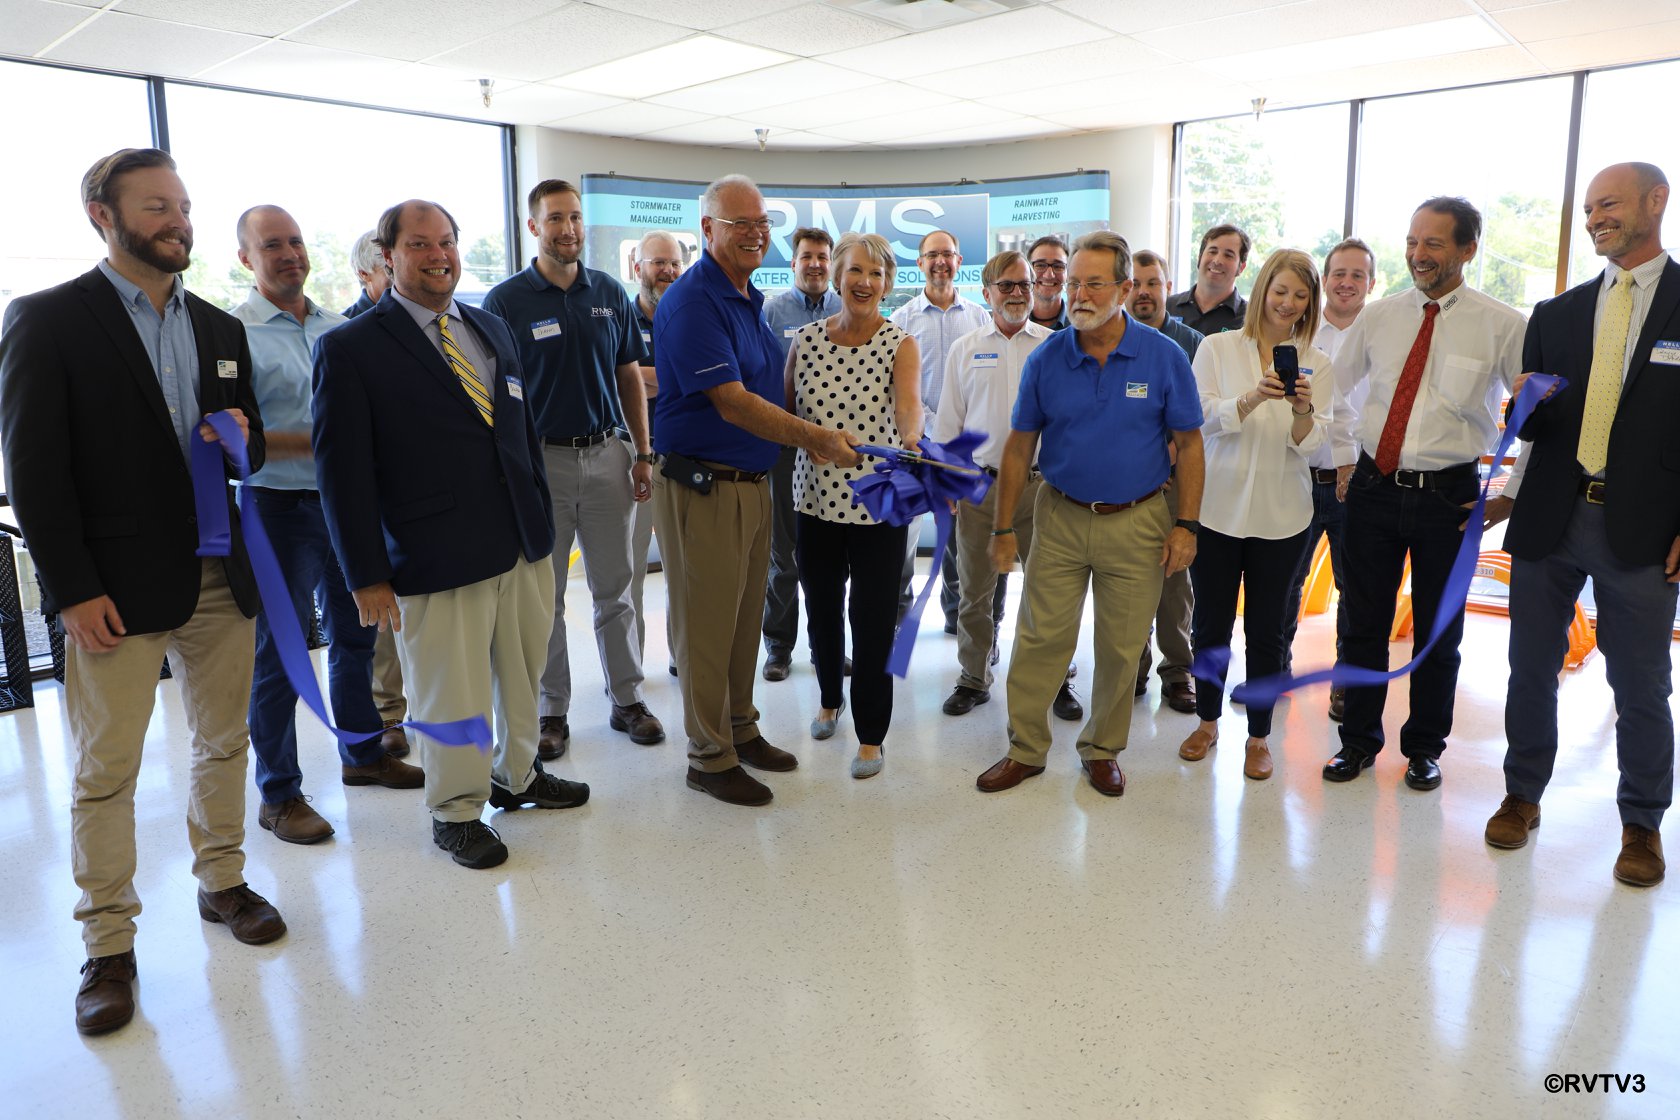 Rainwater Management Solutions Celebrates Grand Opening at New Location In Roanoke VA.